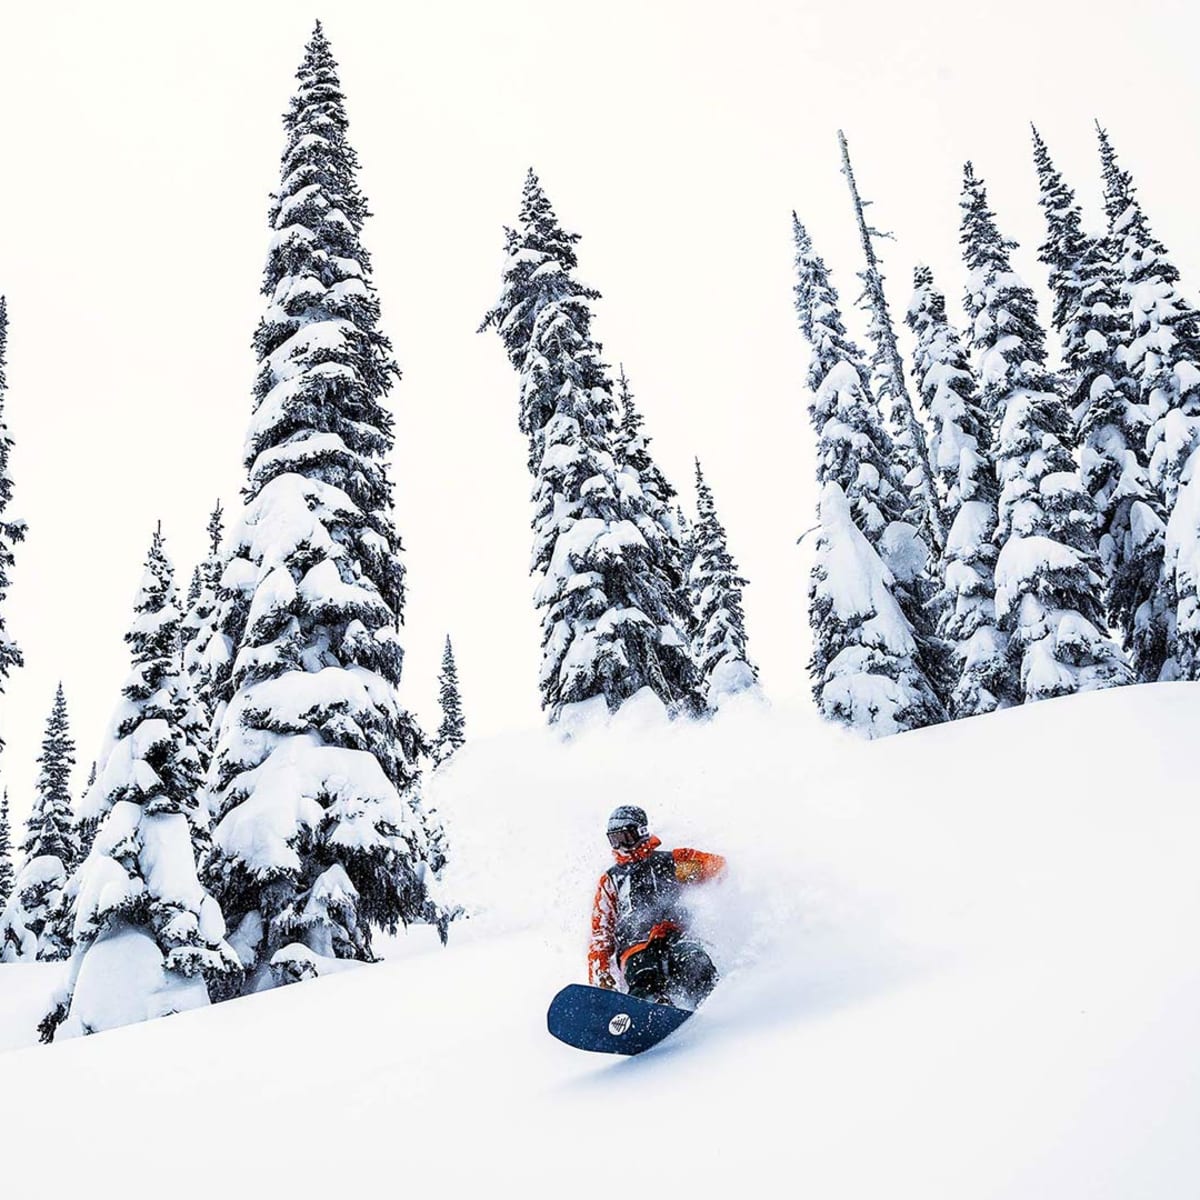 Burton Family Tree Stun Gun: Powder Board Review 2019 - Snowboarder